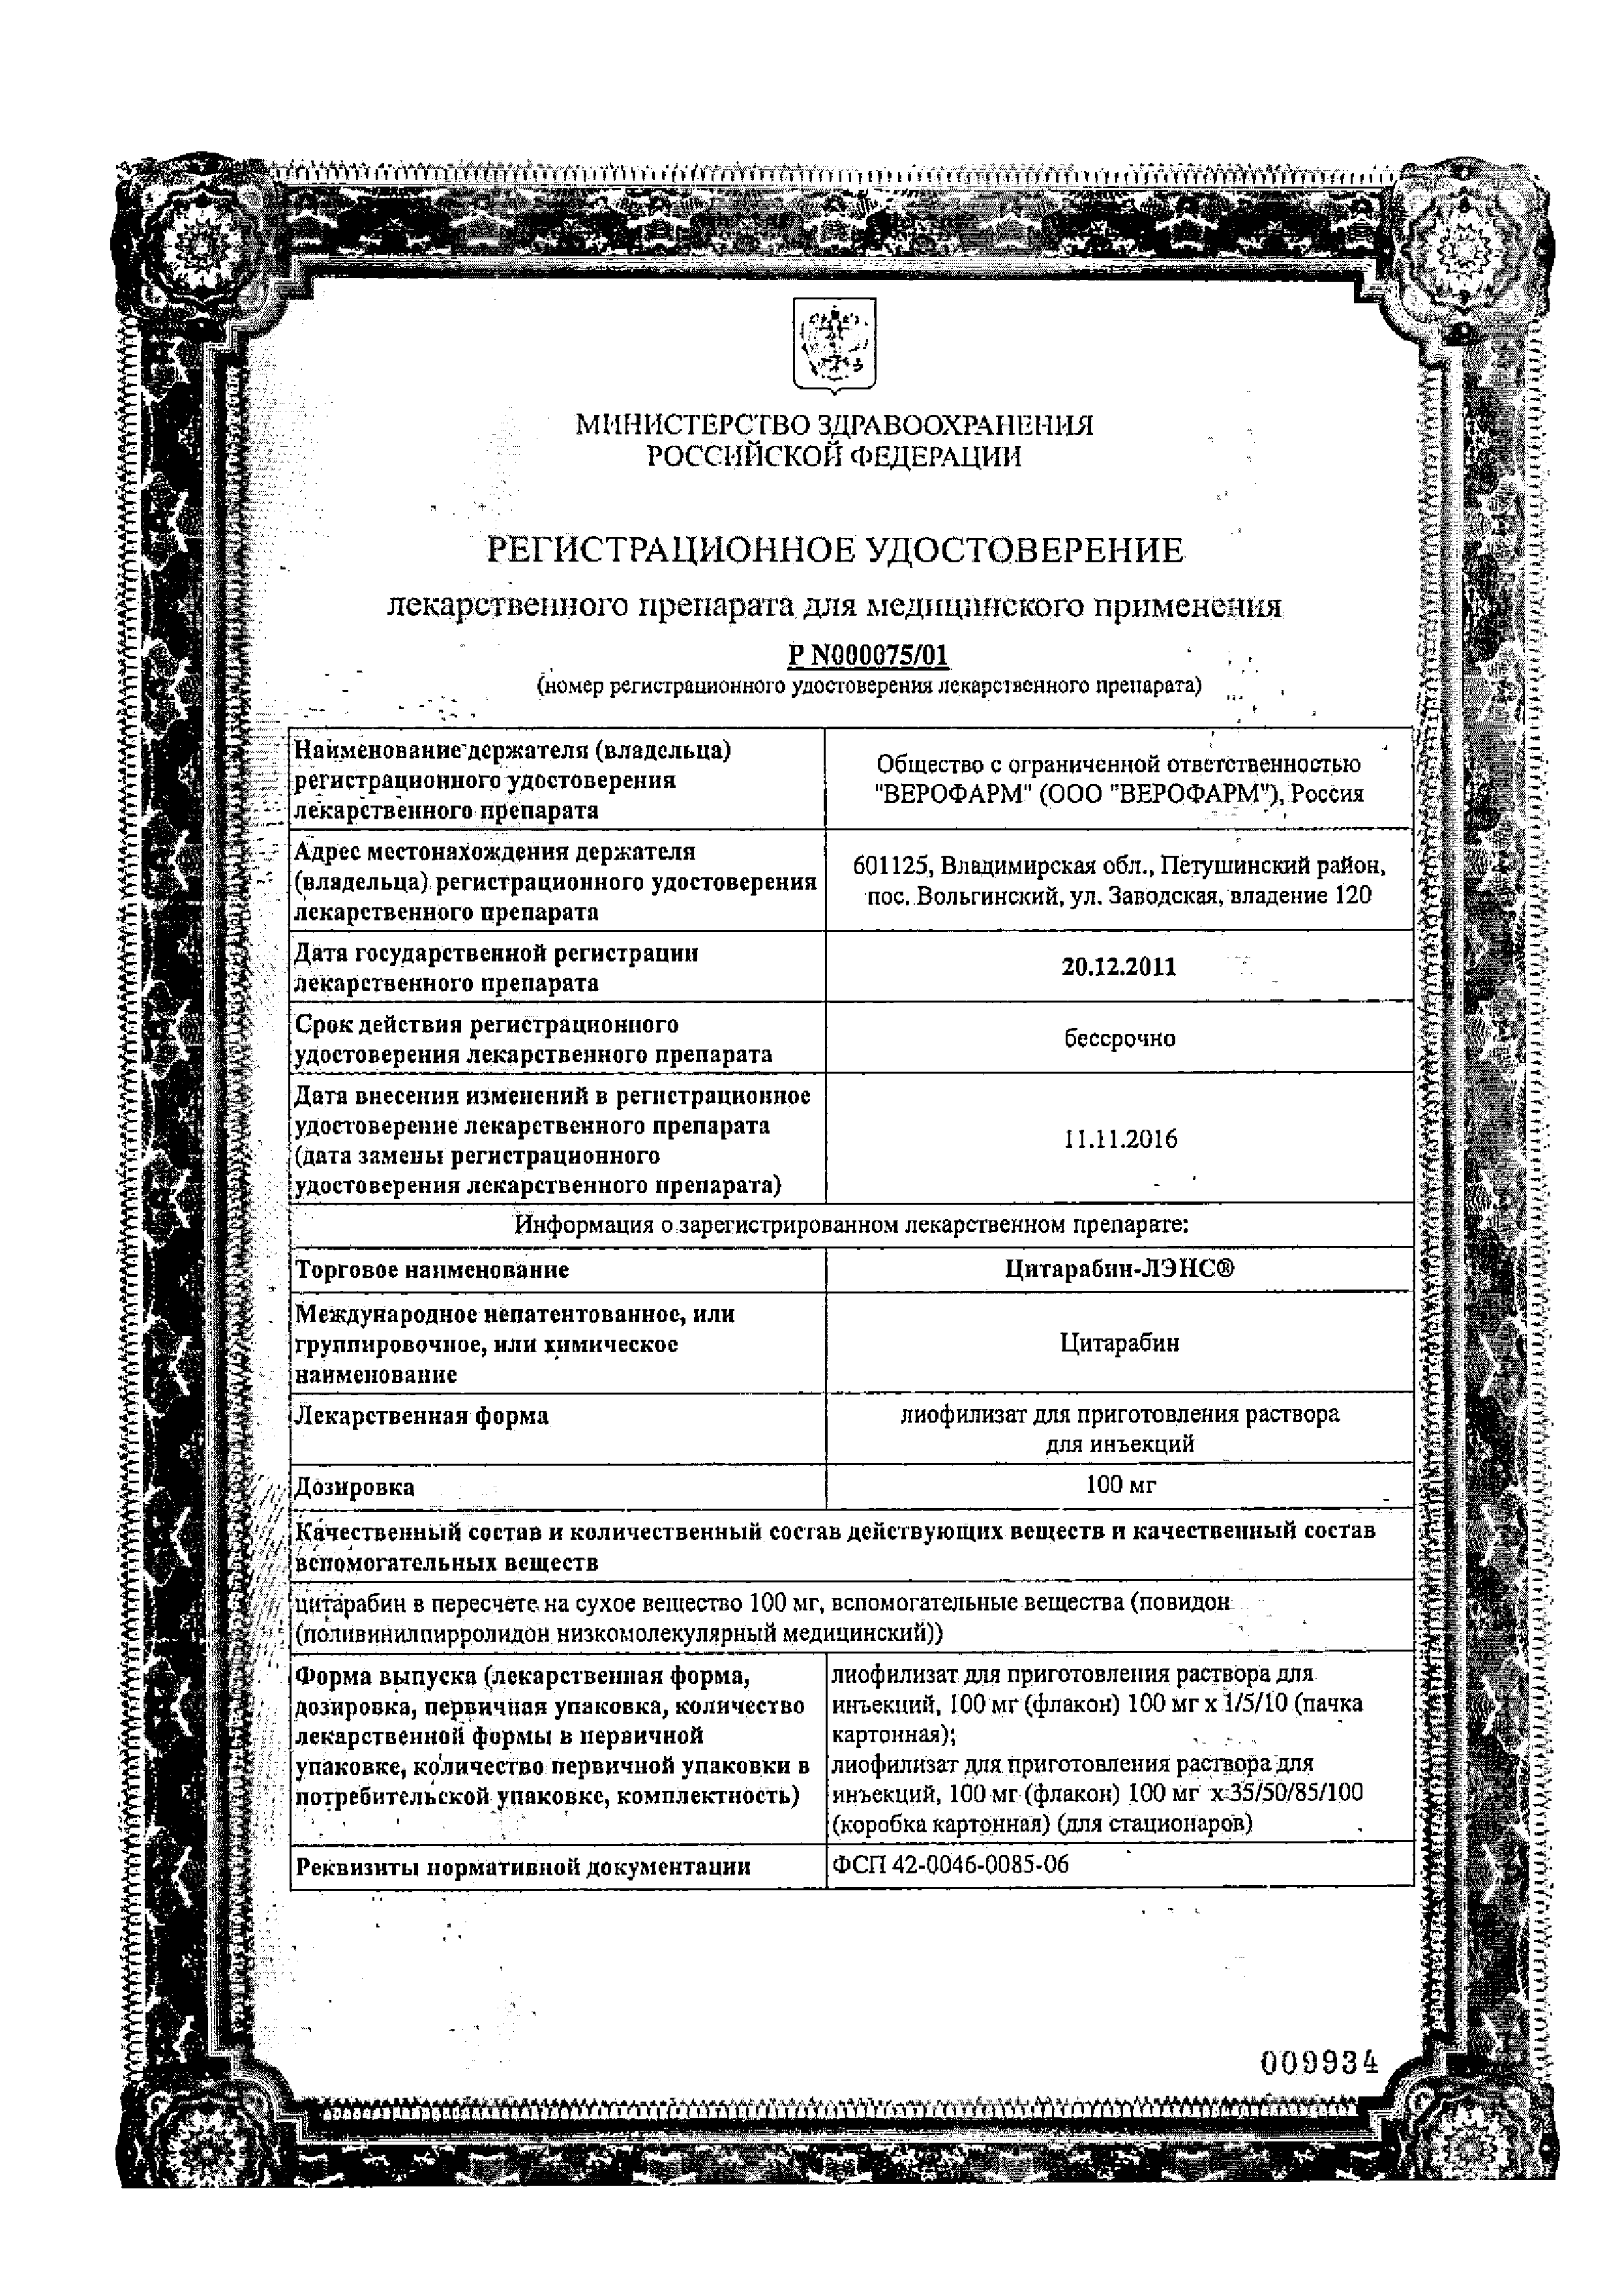 Цитарабин-ЛЭНС сертификат